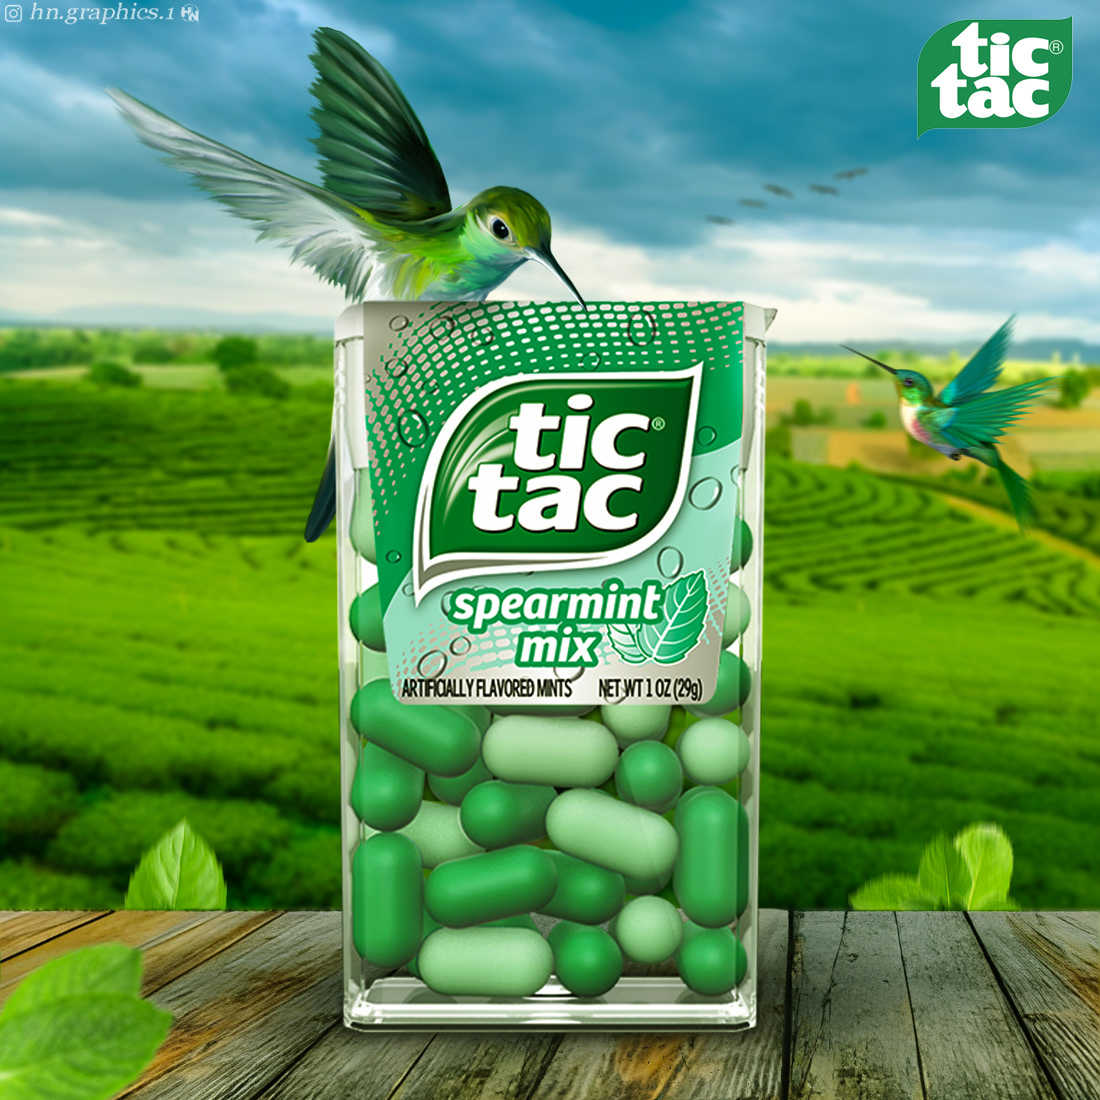 Tictac mint fresh green Nature photoshop Graphic Designer marketing   Social media post Socialmedia